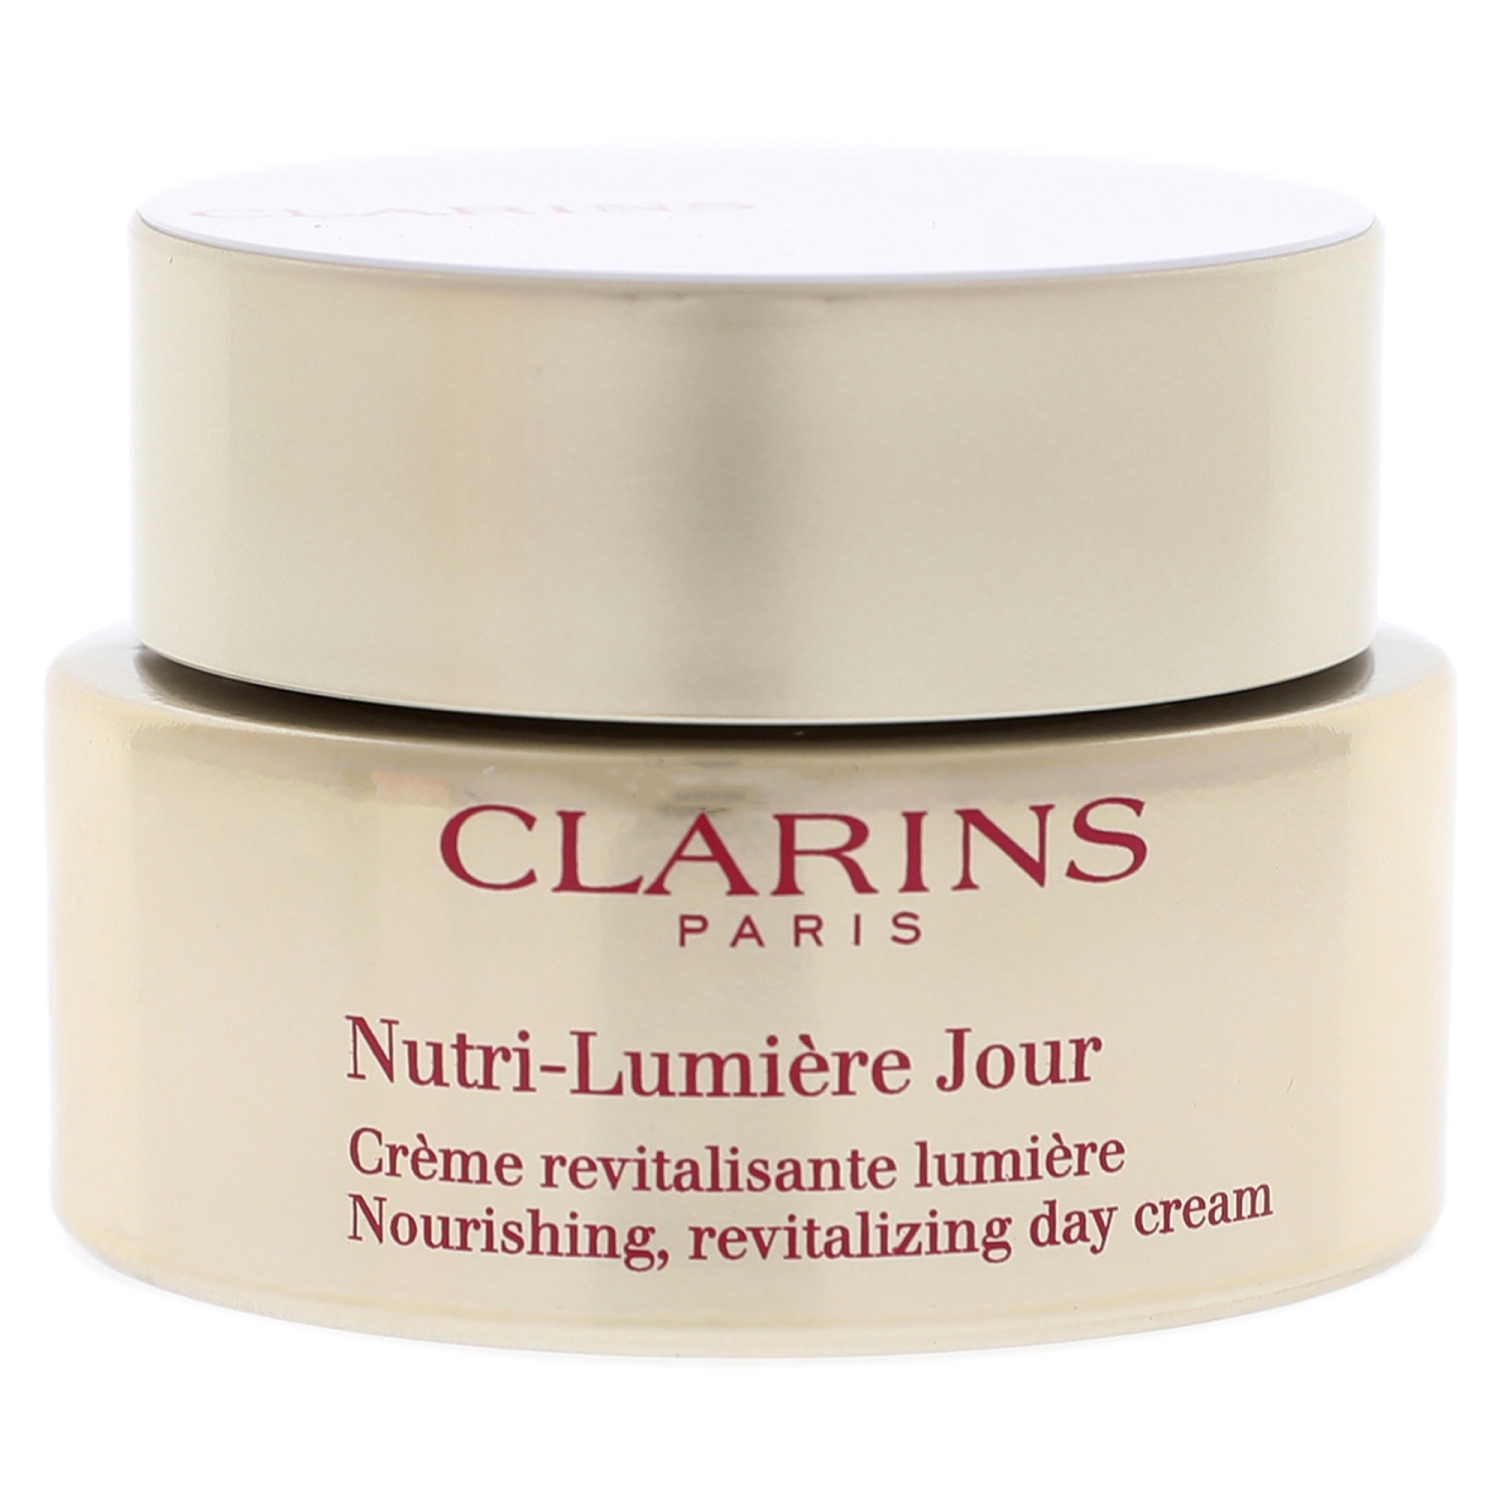 Nutri-Lumiere Day Cream by Clarins for Unisex - 1.6 oz Cream